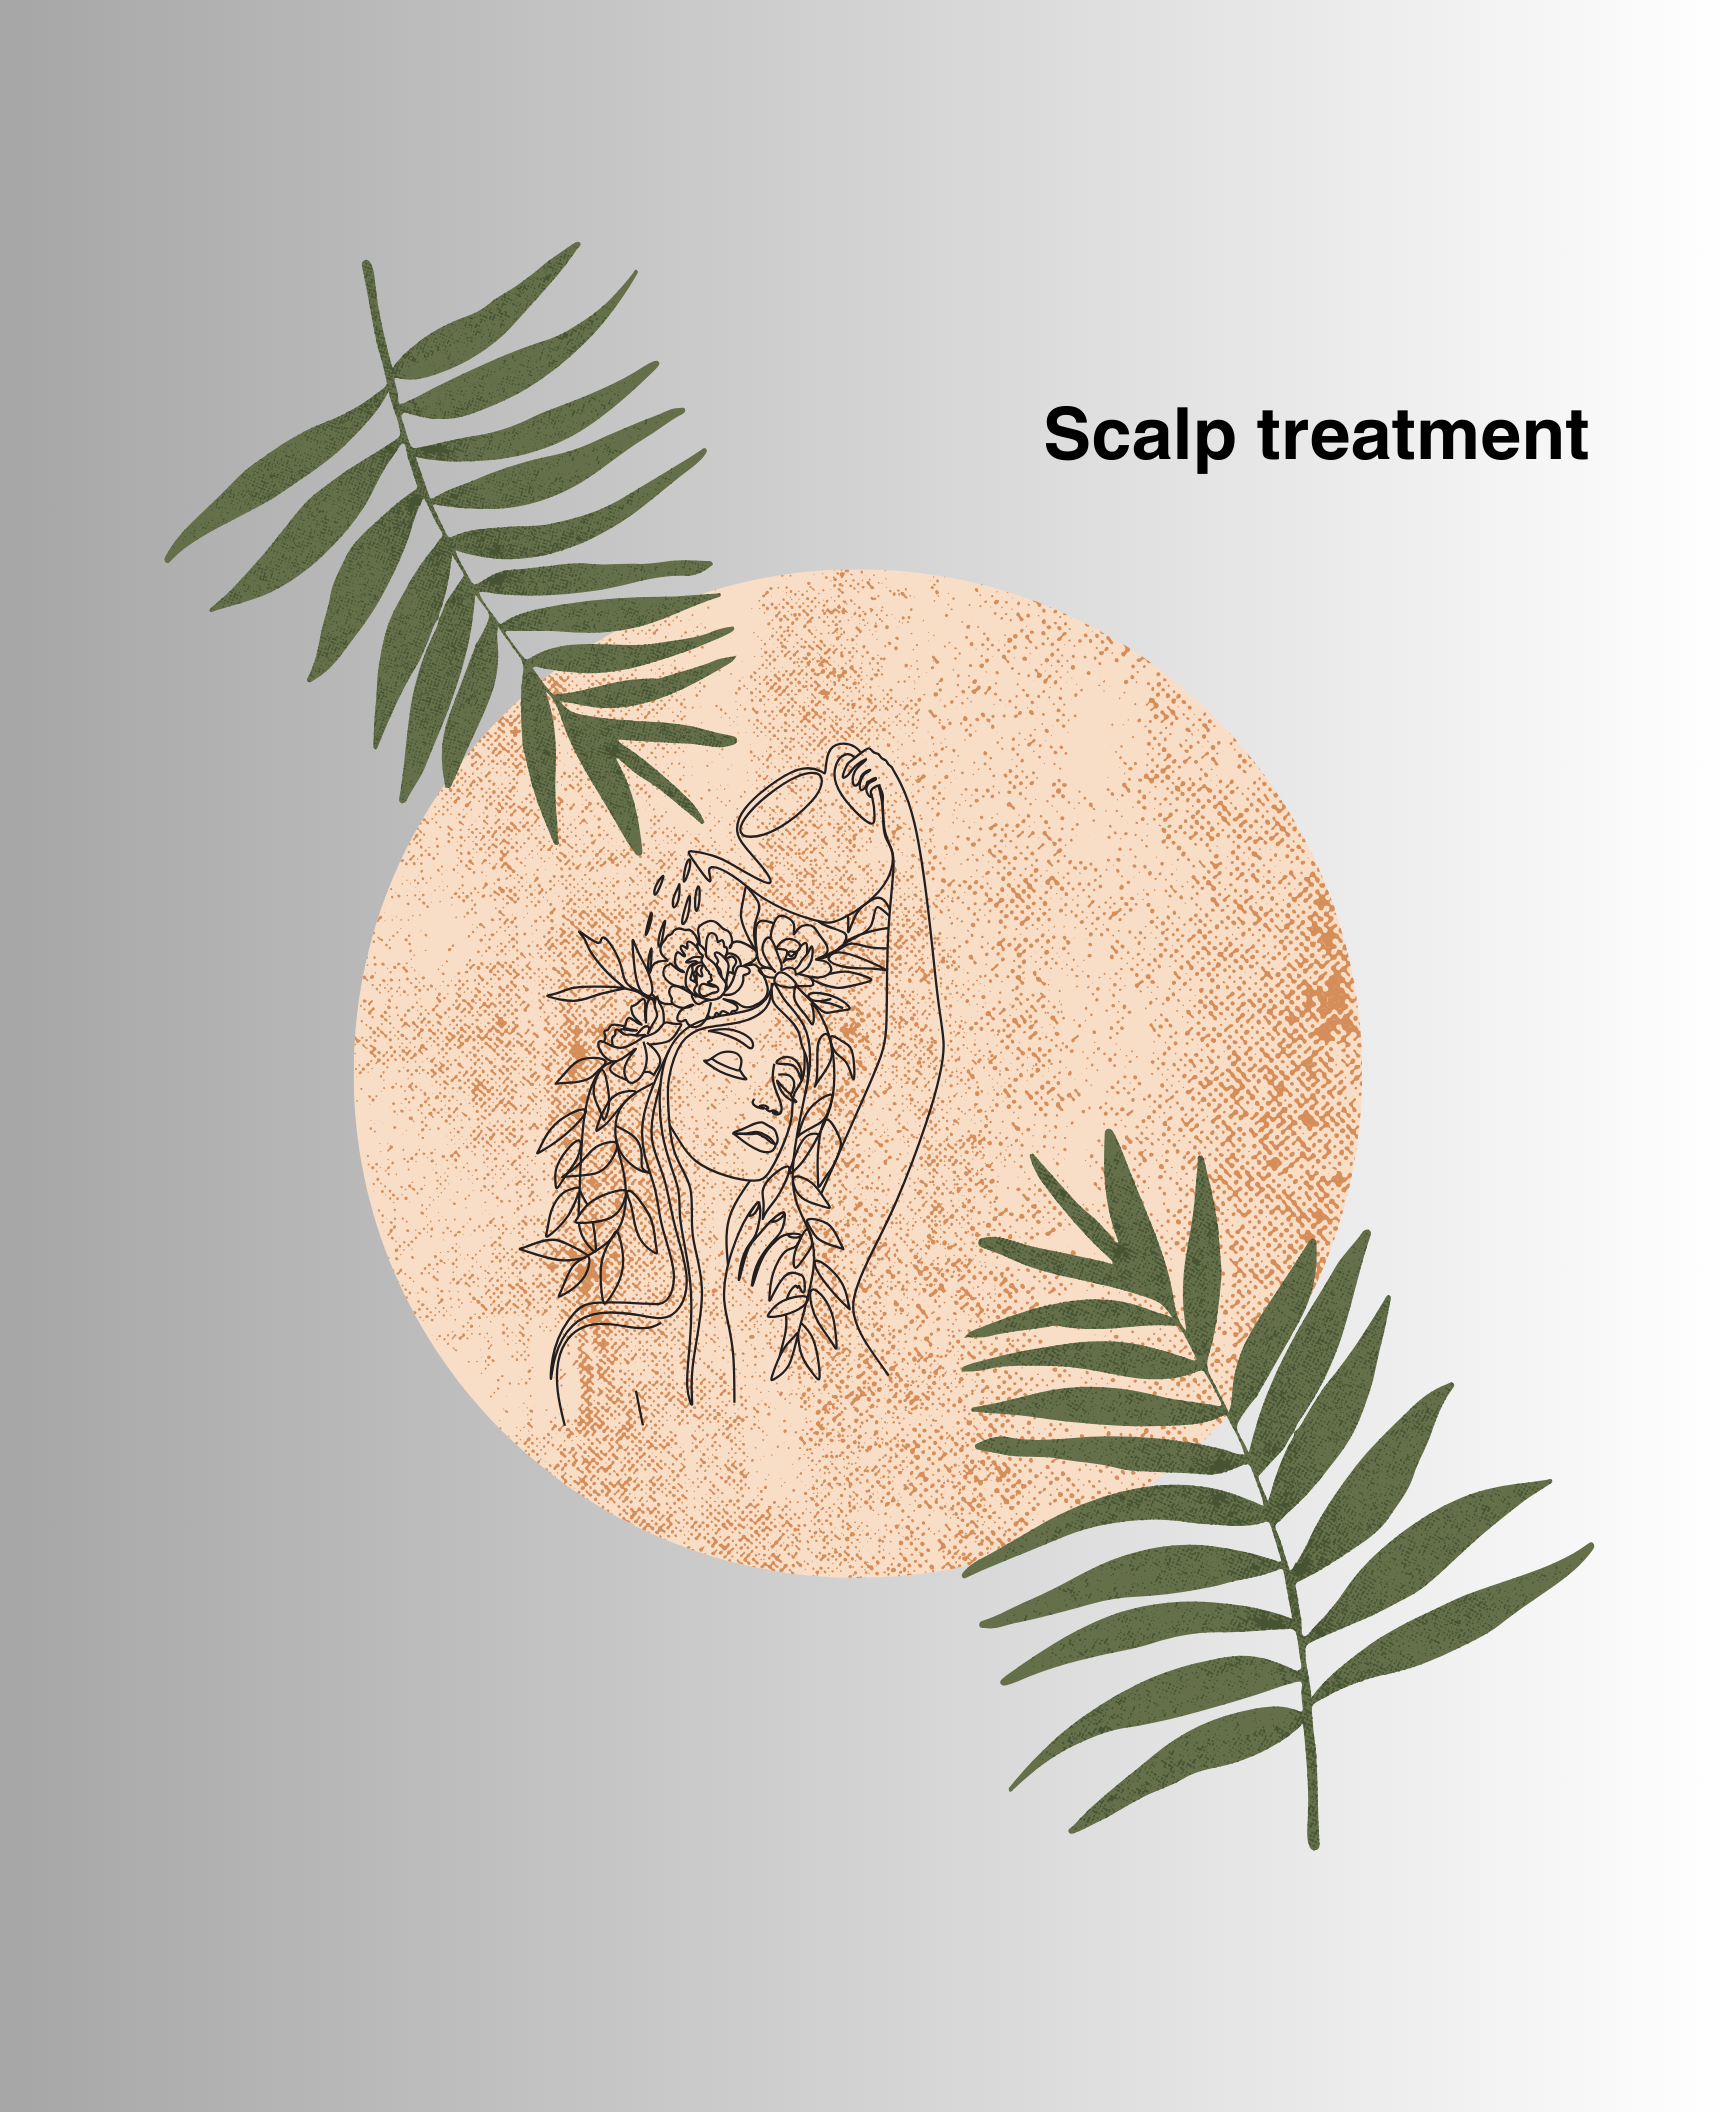 Scalp treatment